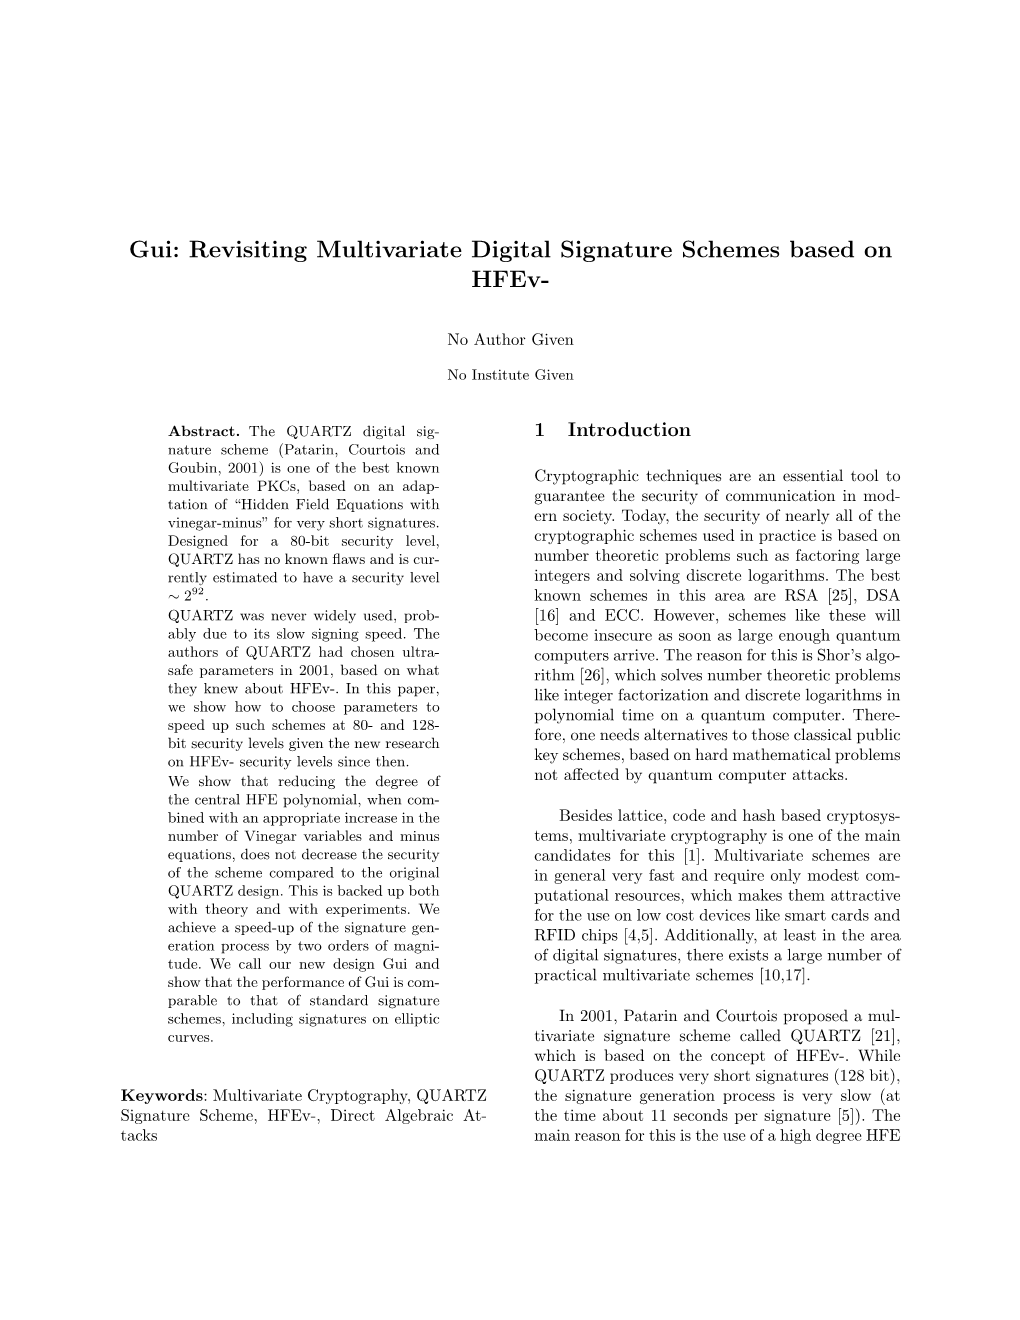 Gui: Revisiting Multivariate Digital Signature Schemes Based on Hfev